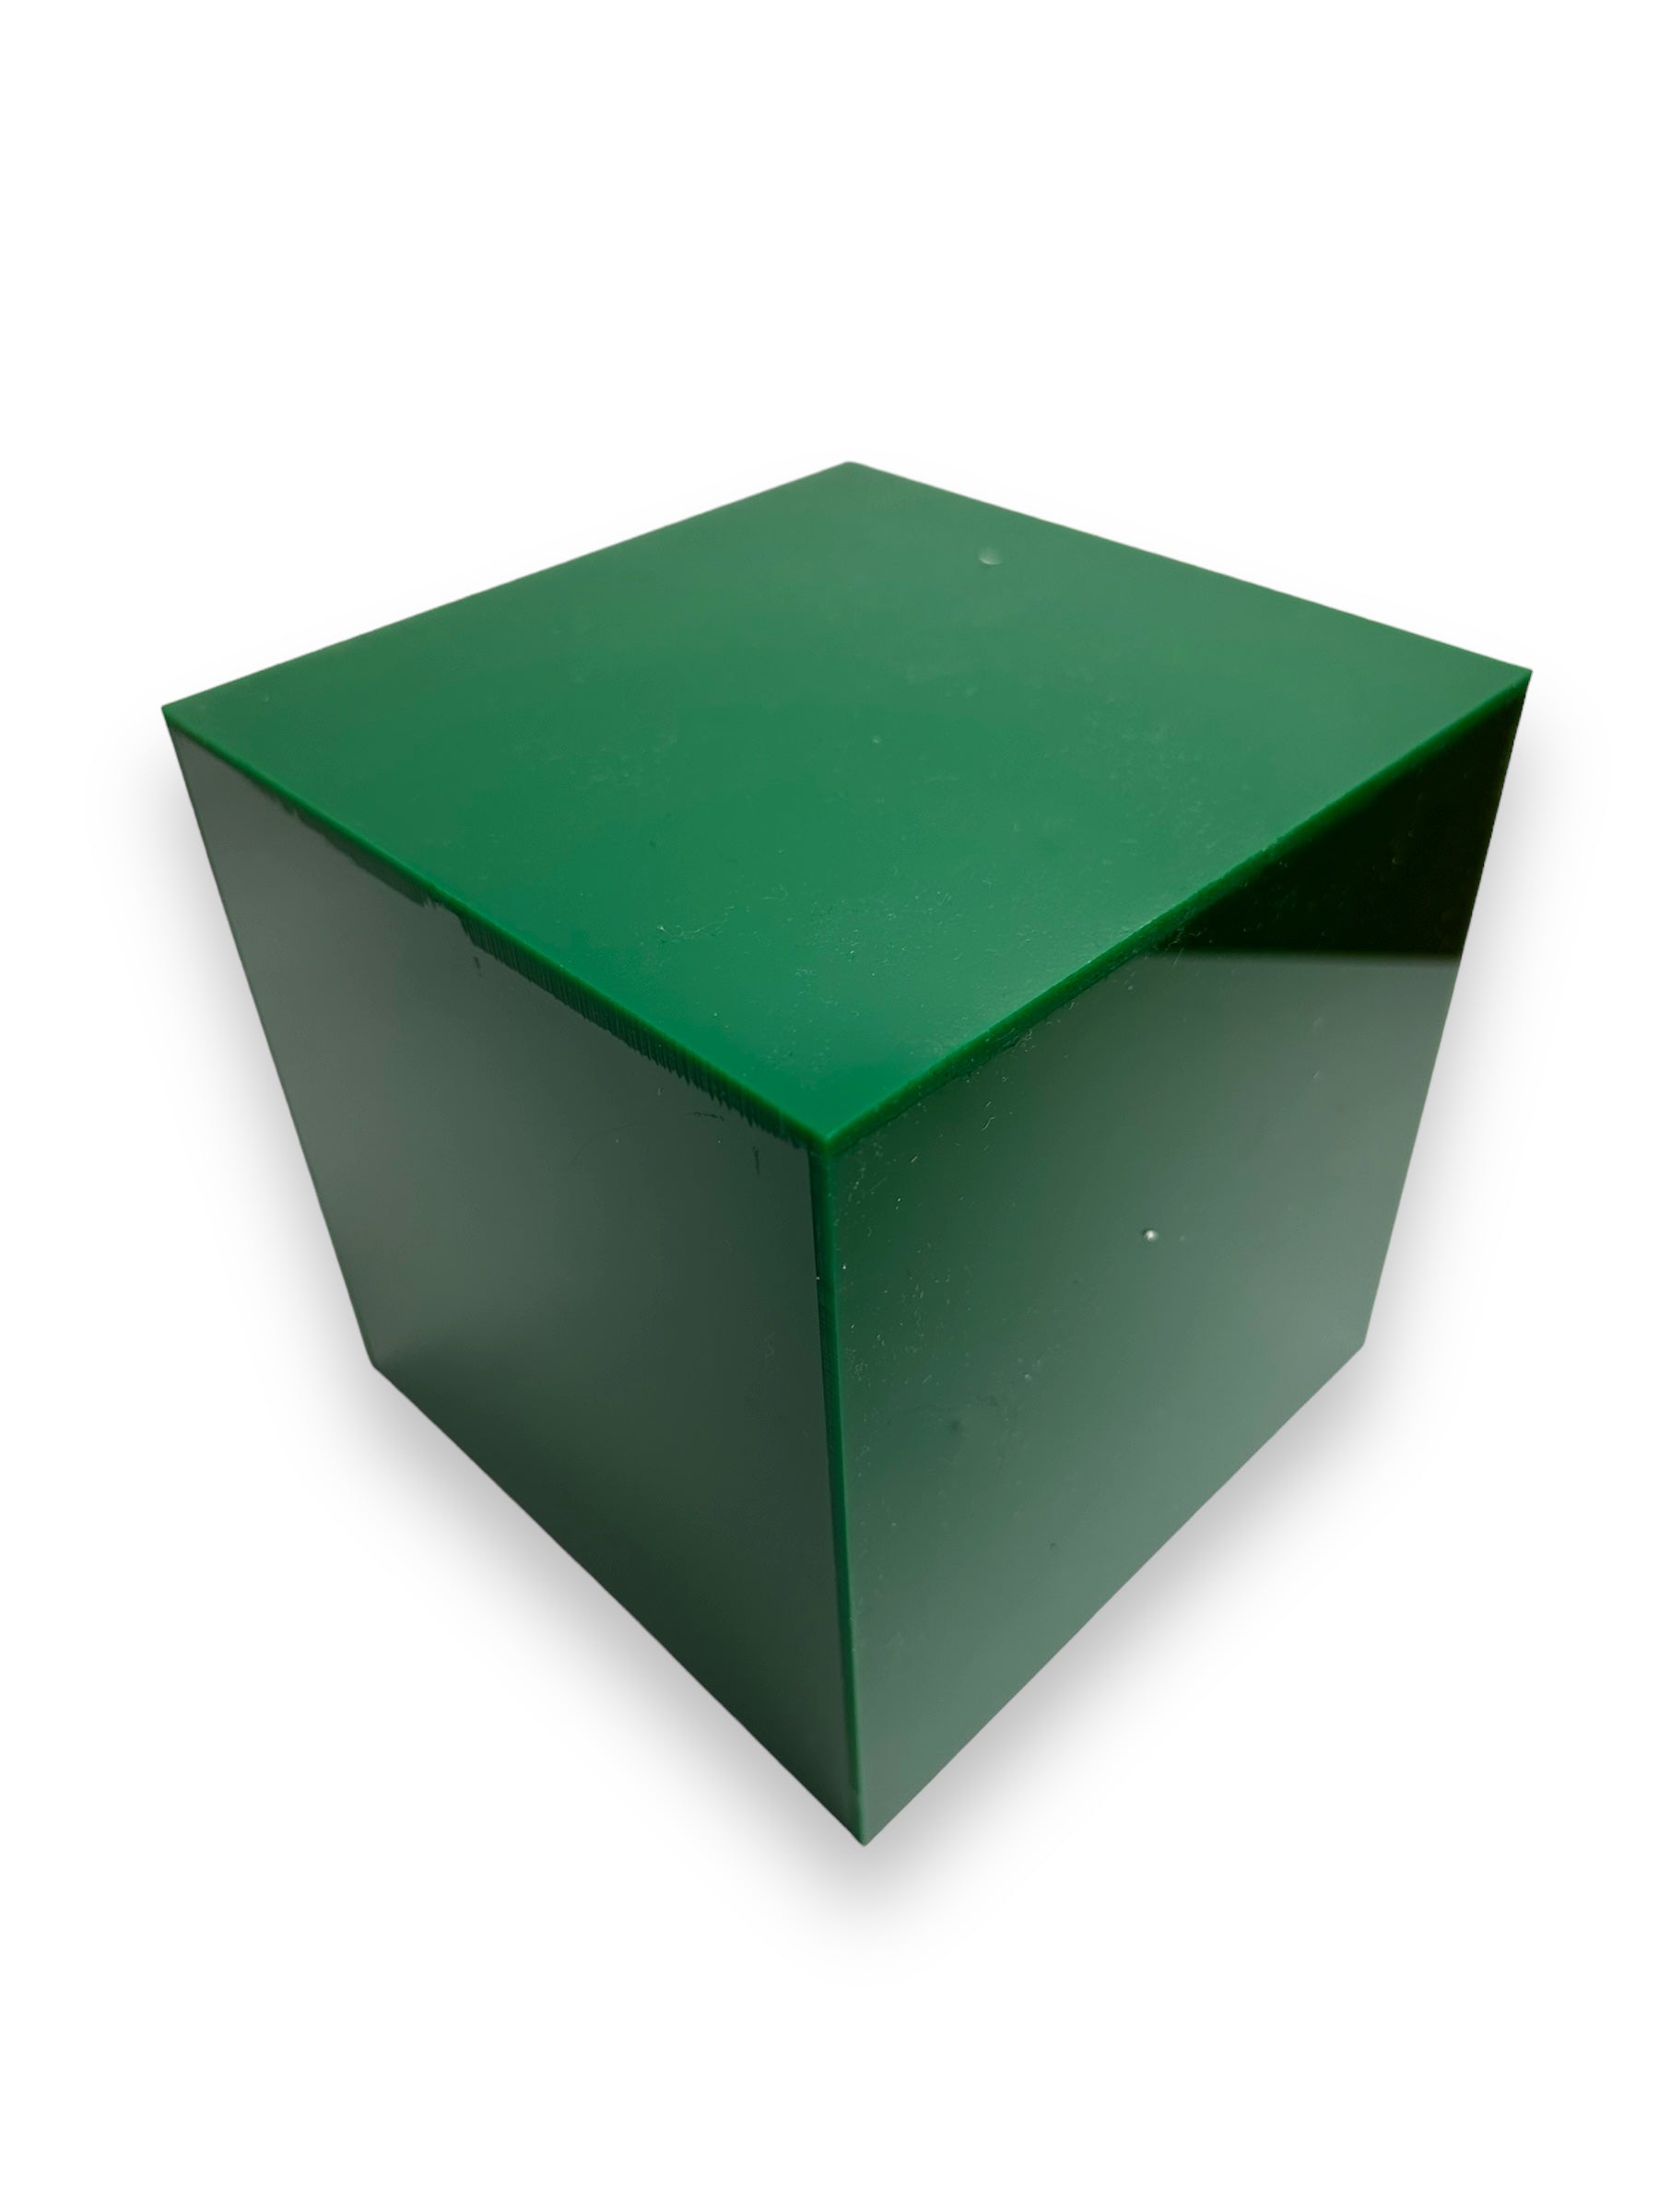 Green custom made 5 sided acrylic box